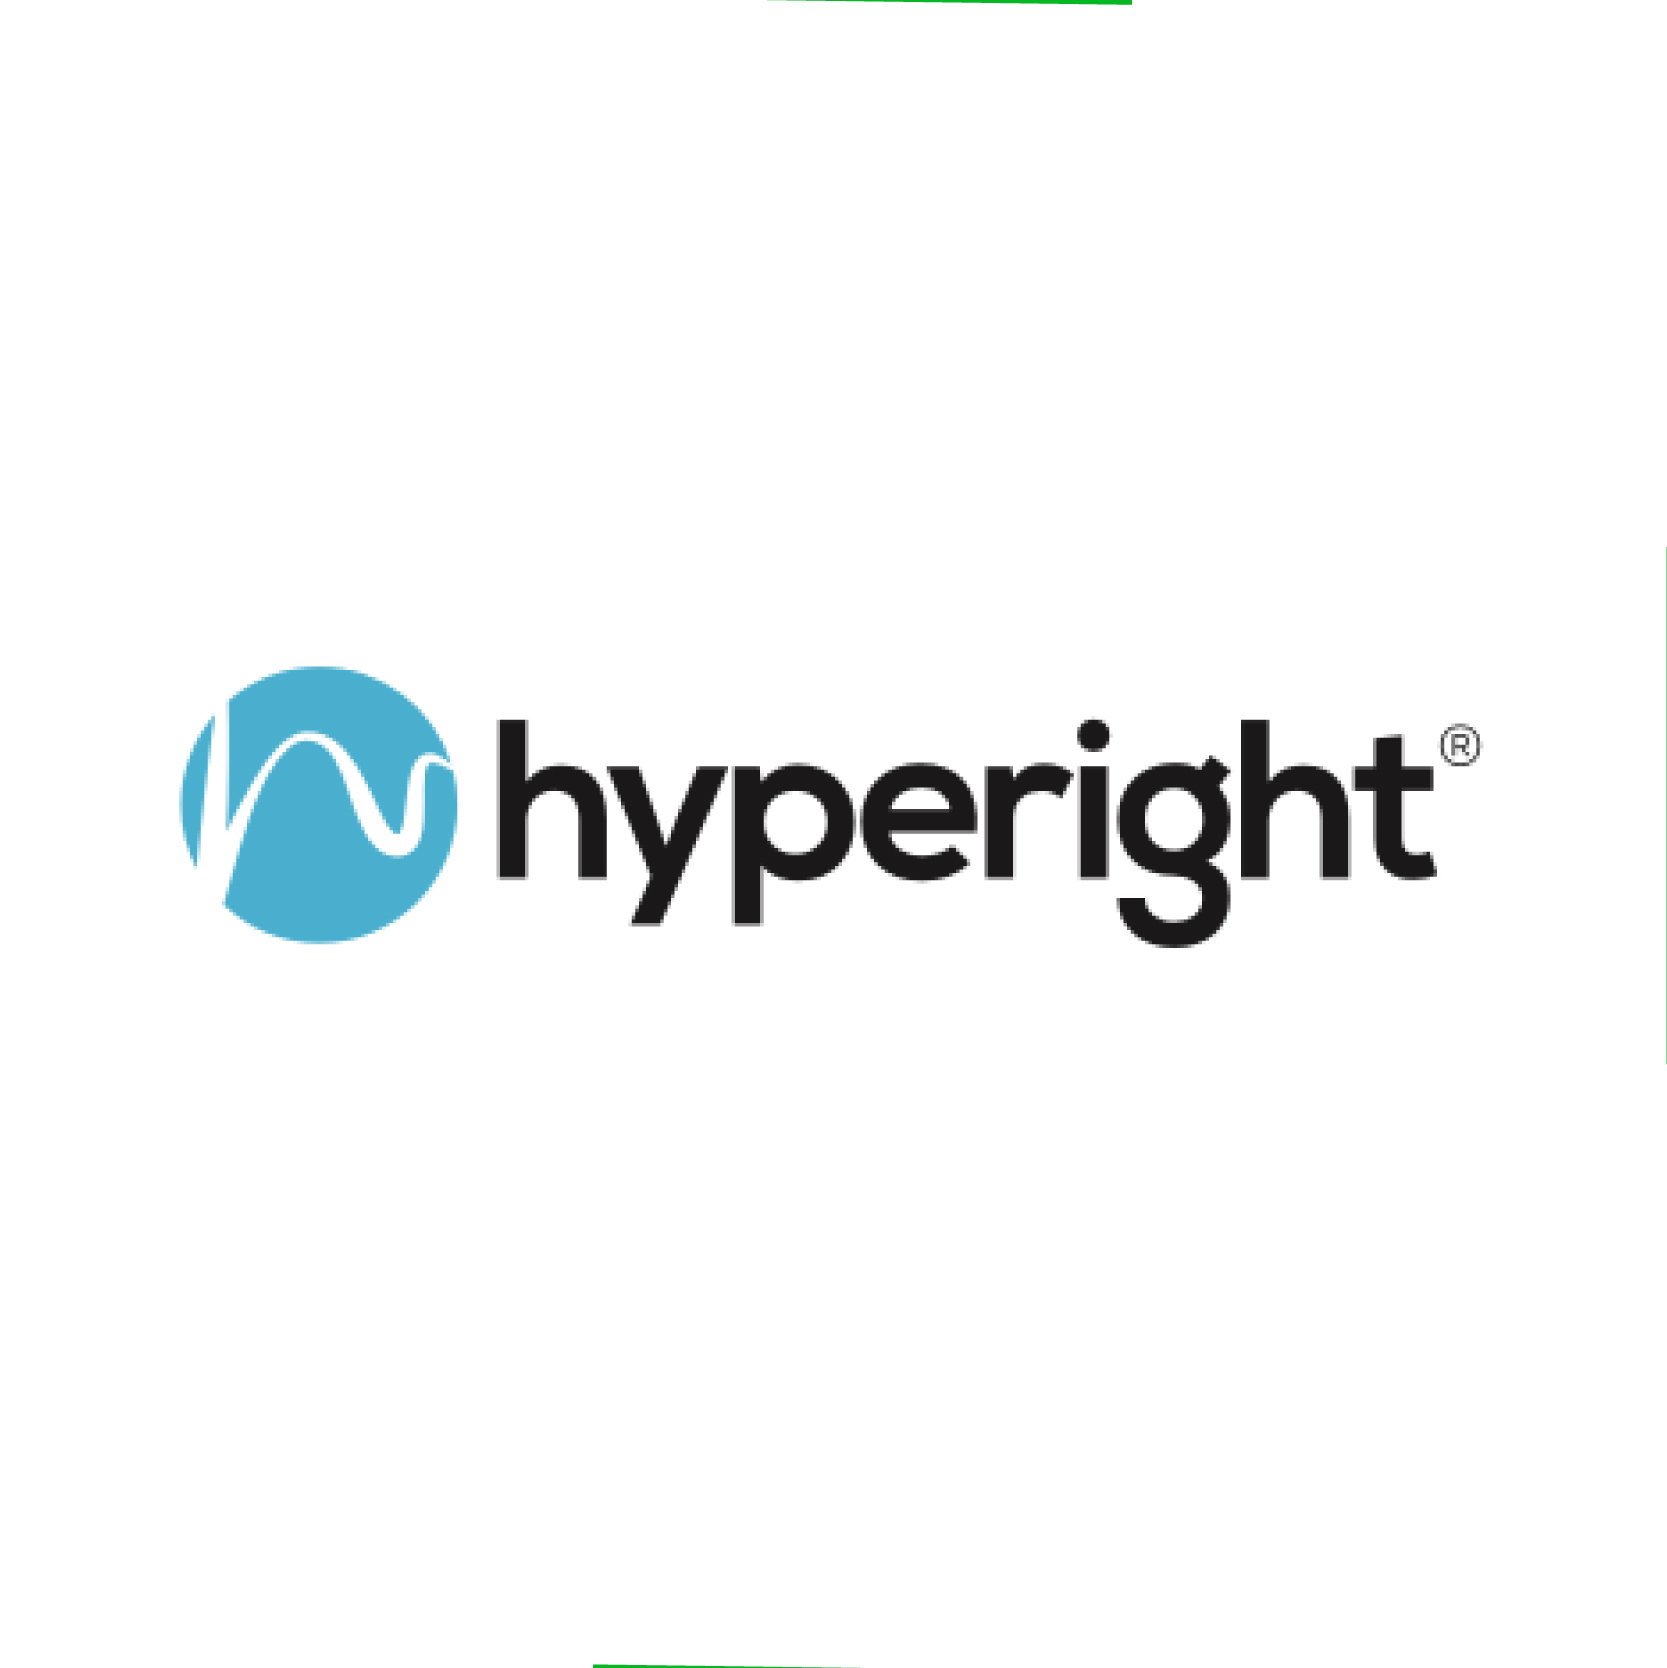 Hyperight